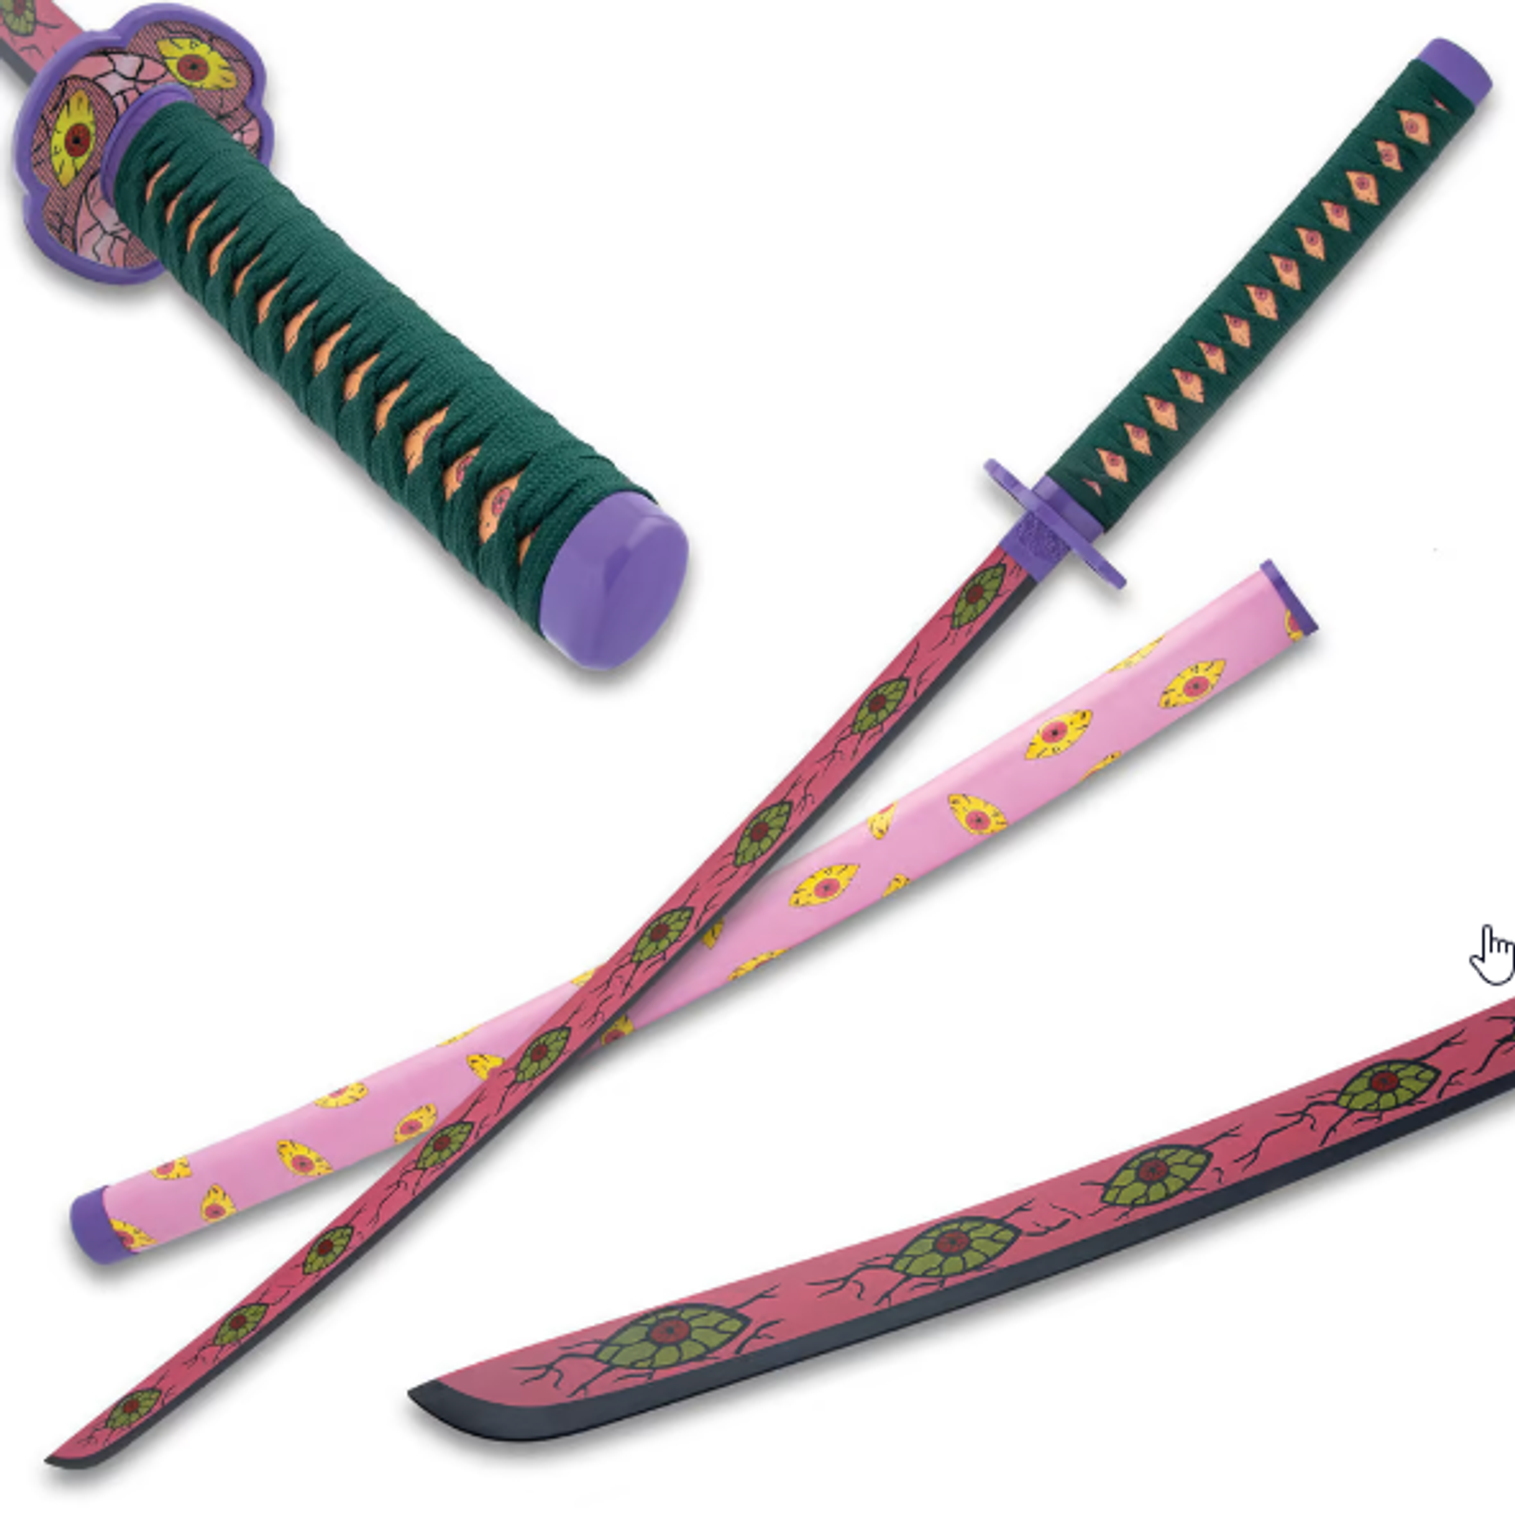 Kokushibo Demon Slayer Sword and Scabbard - Carbon Steel Blade